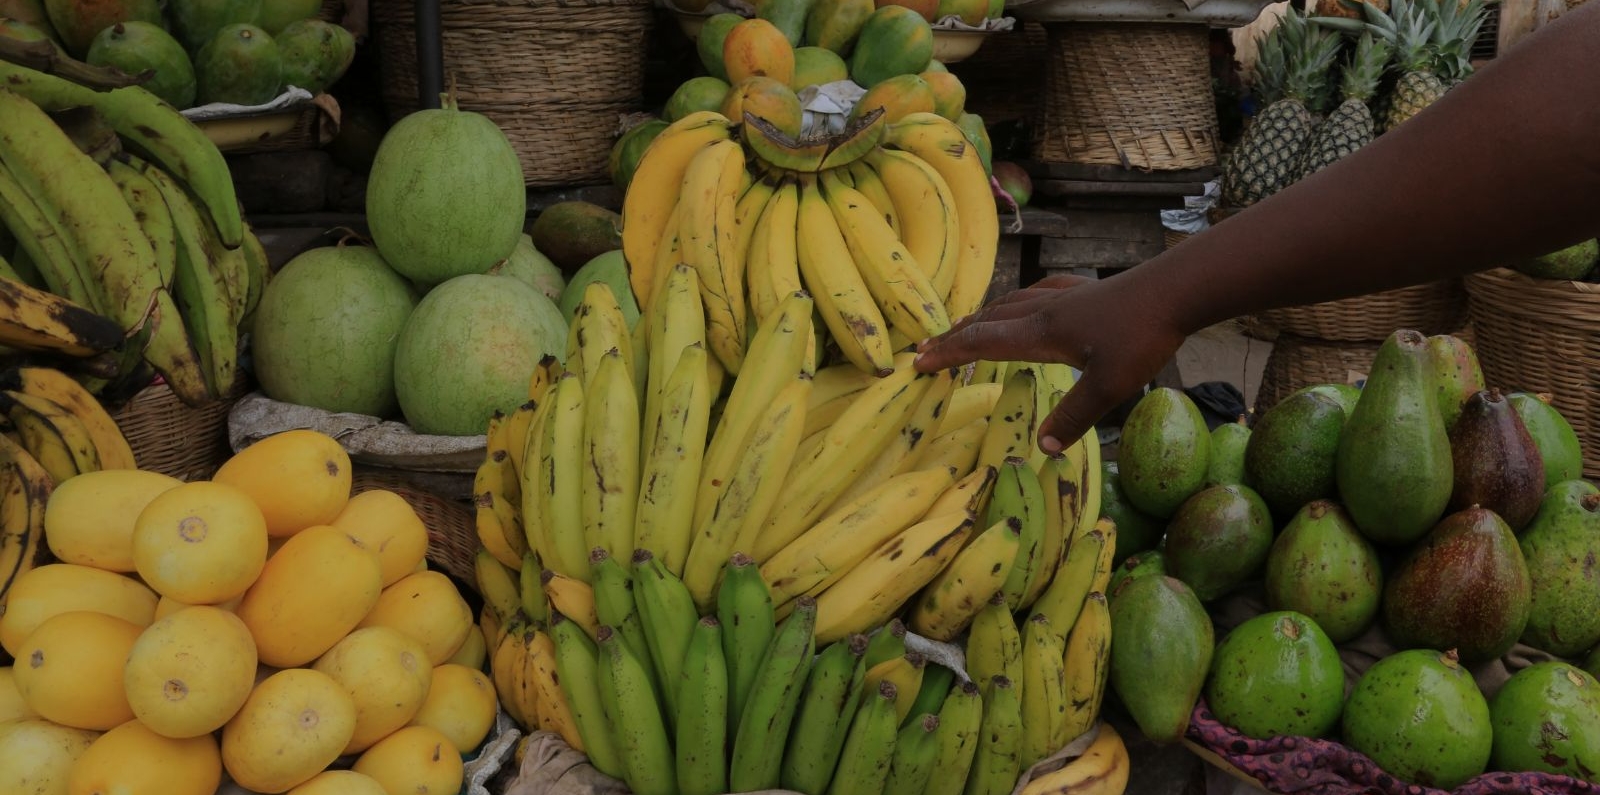 African market. Sale of fruit. Bananas. Lome. Togo. West Africa.